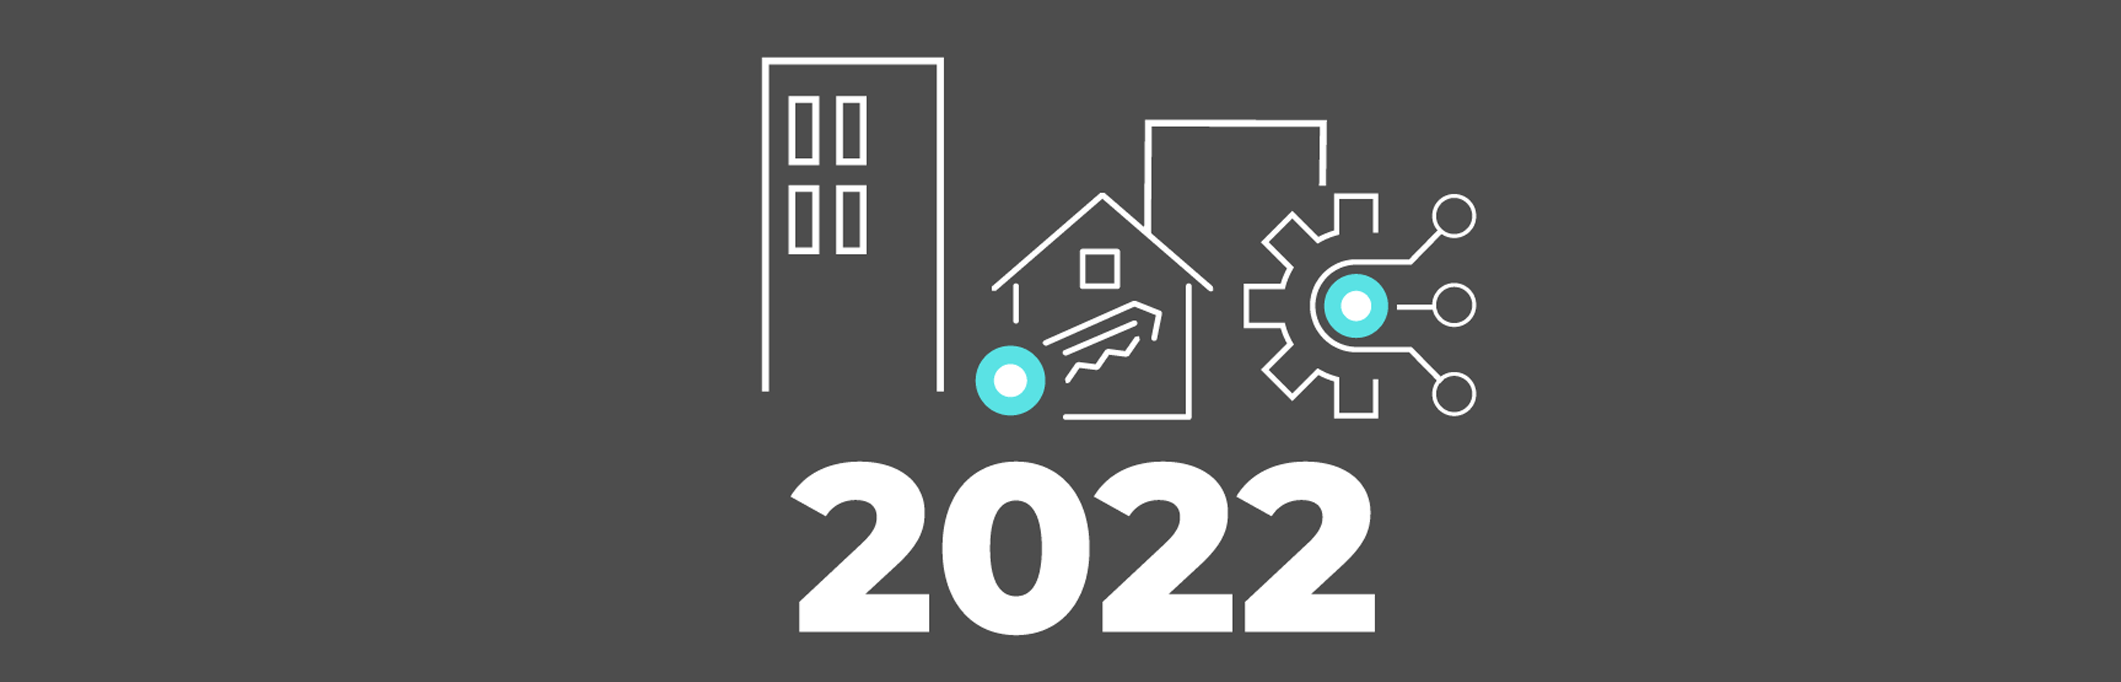 Construction Market Trends 2022 - Hero Image